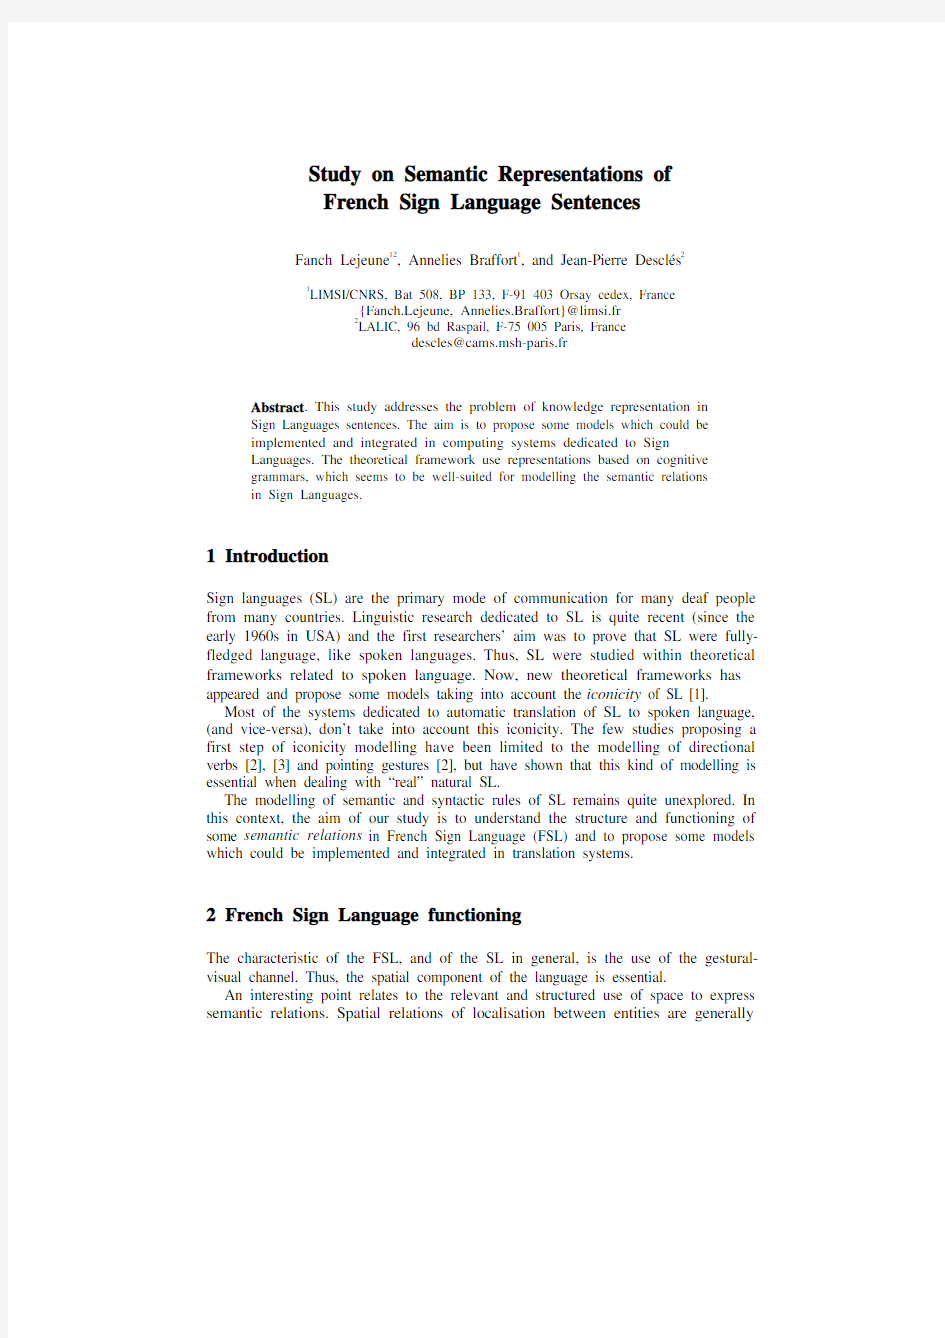 Study on Semantic Representations of French Sign Language Sentences